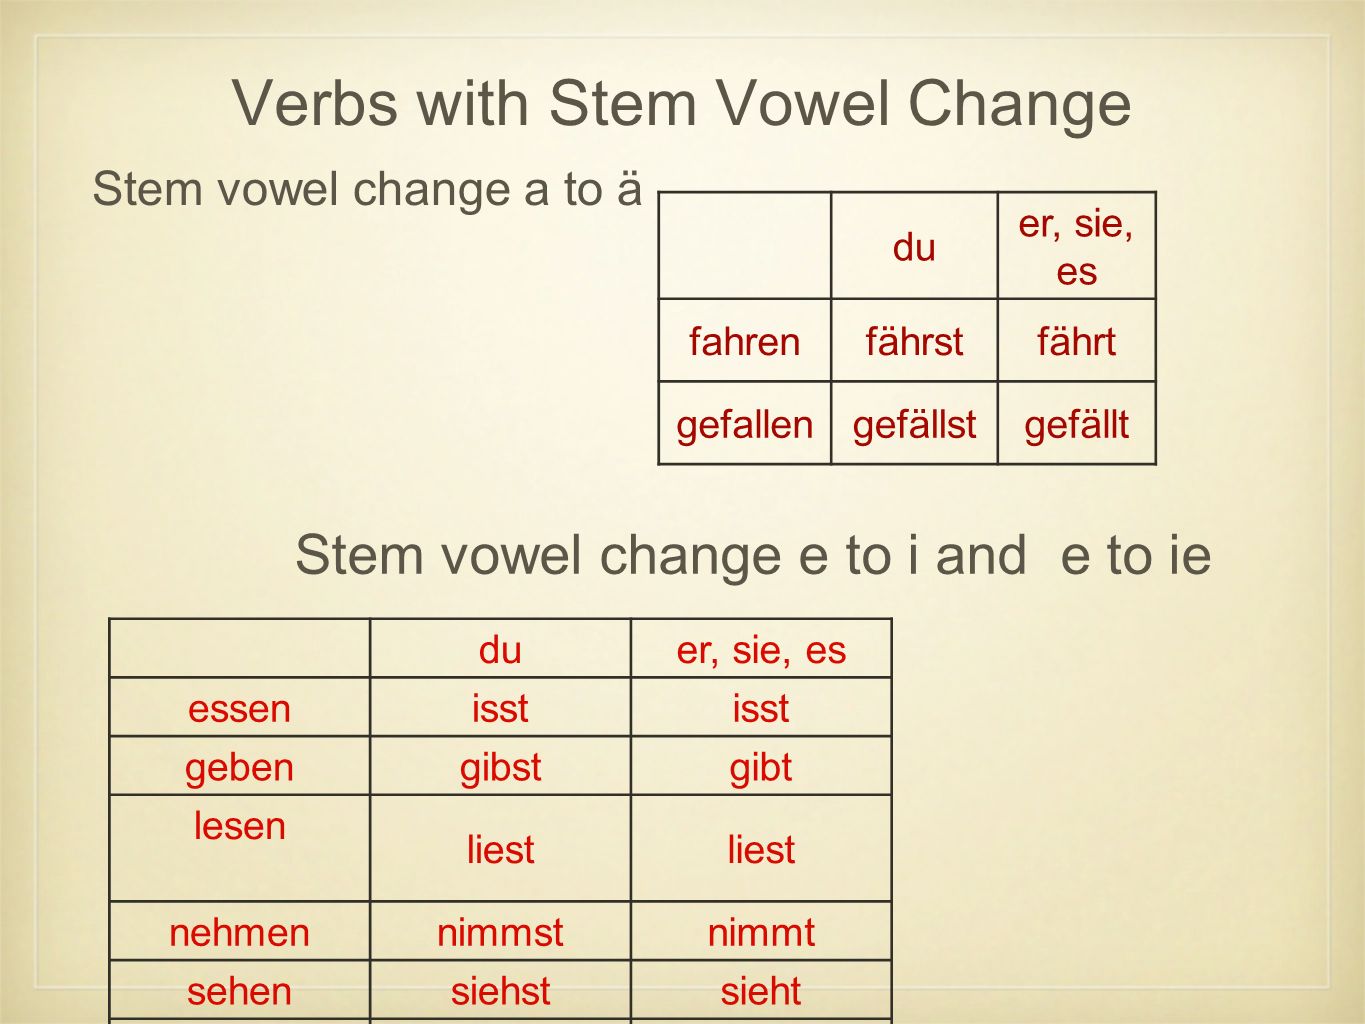 Verbs with Stem Vowel Change